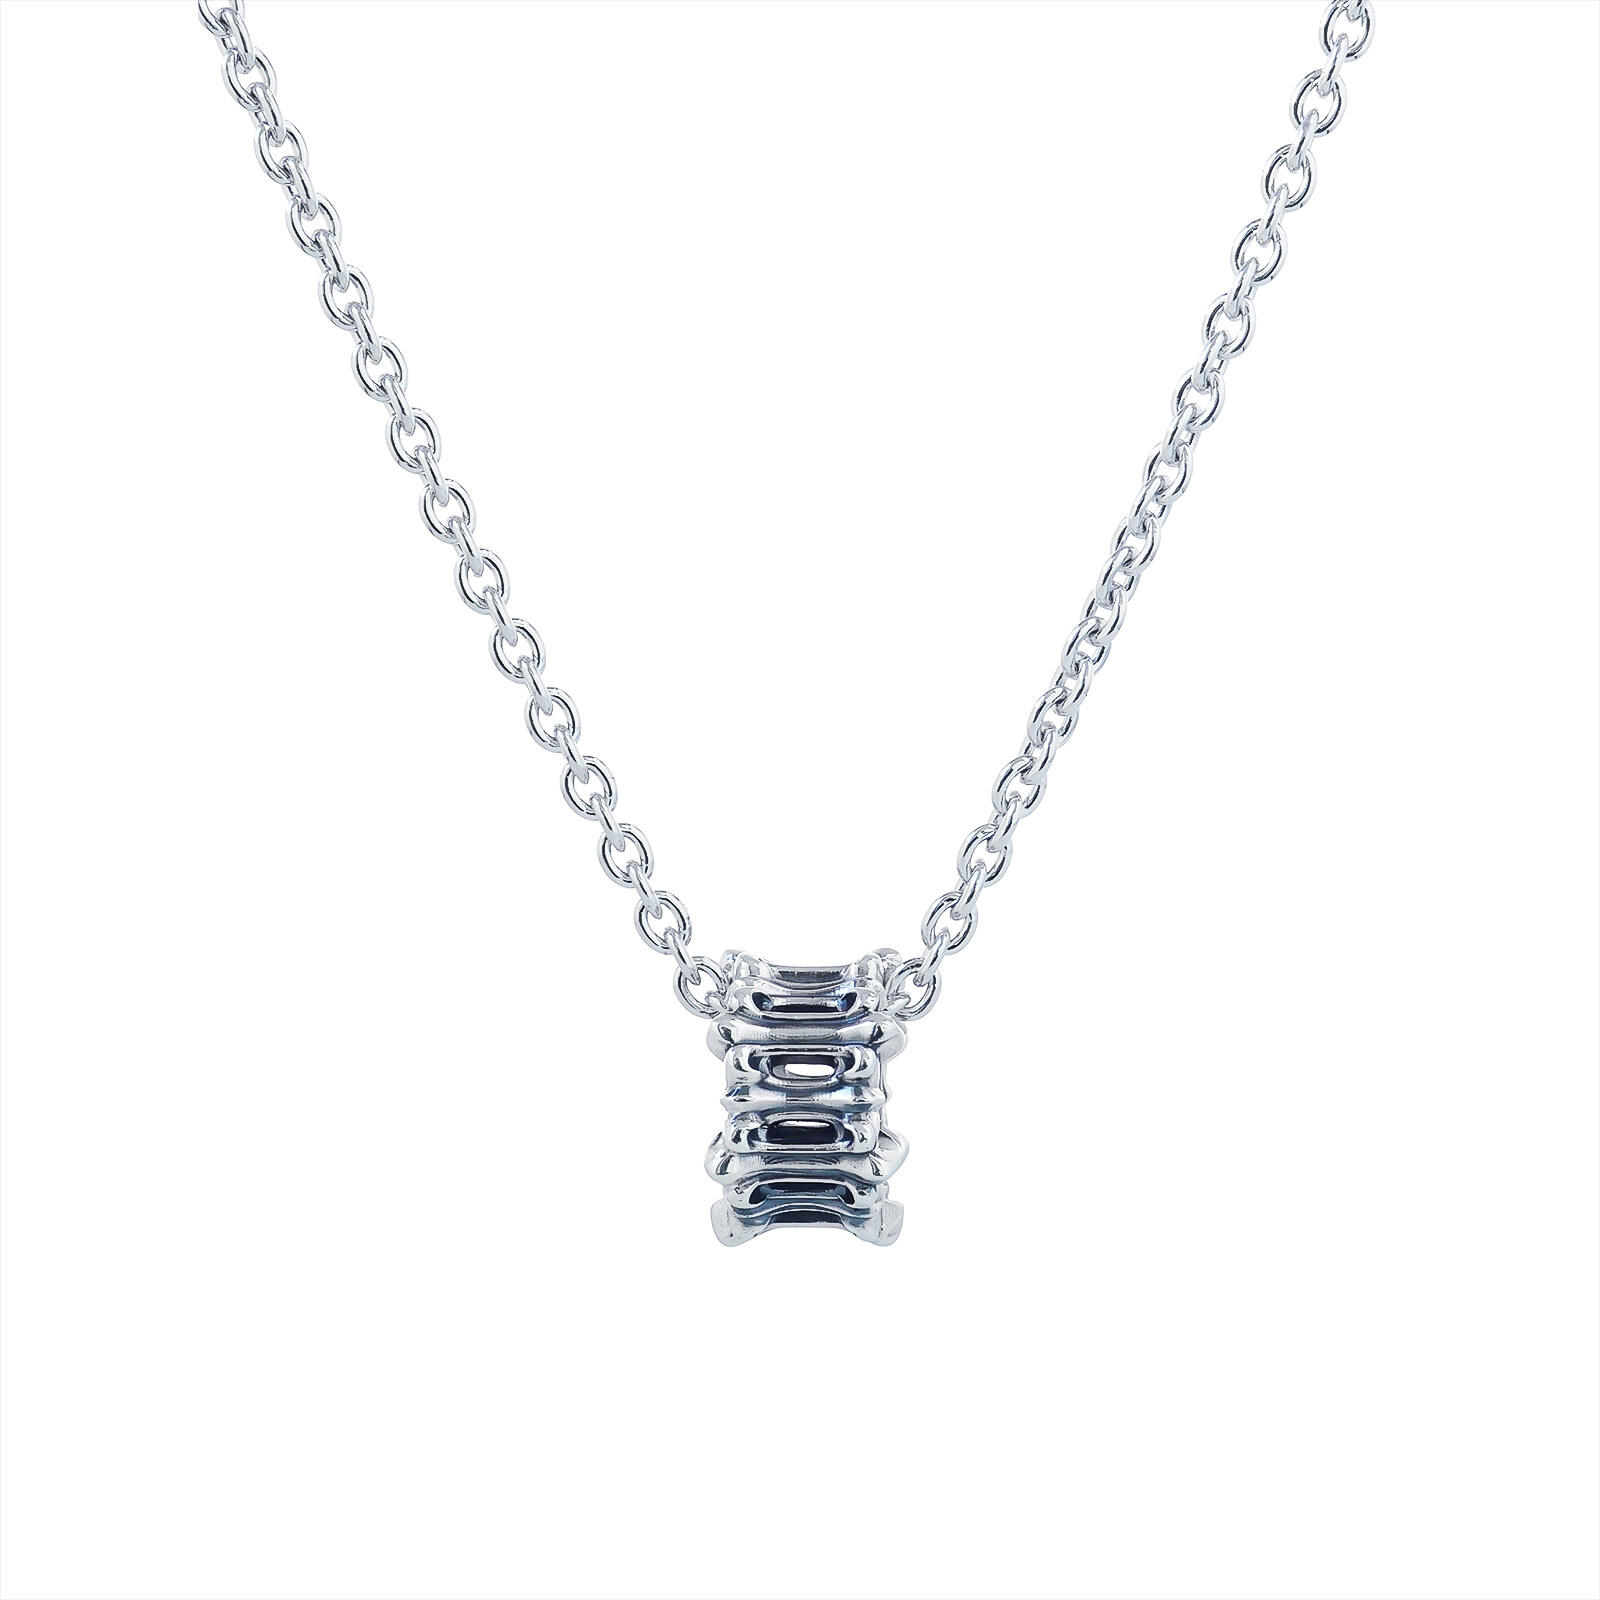 Classic Necklace - Prophecy Ring Bead Set 45 -50 cm สร้อยคอเงินแท้ 925 ทำมือแฮนด์เมด พร้อมจี้ Prophecy Ring Bead ลายโซ่คลาสสิกชุบไวท์โกลด์ **สามารถถอดจี้ออกได้